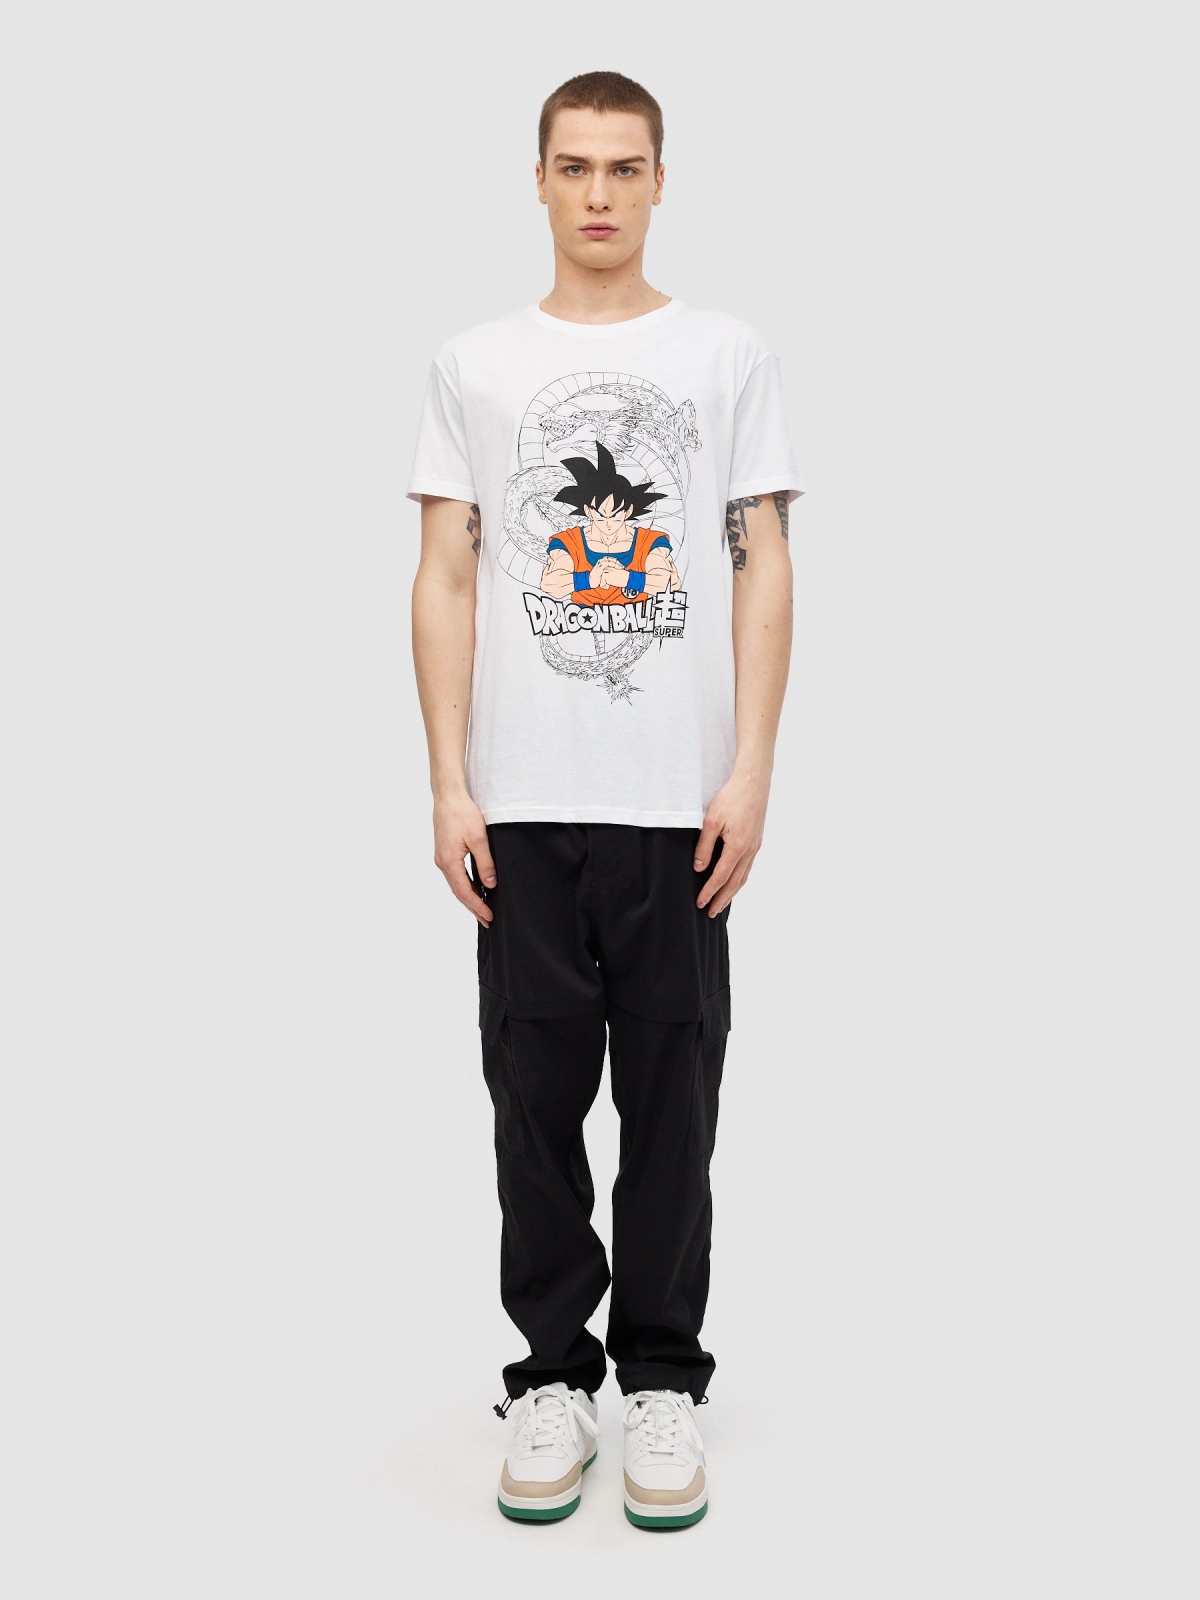 Camiseta Dragon Ball Super blanco vista general frontal